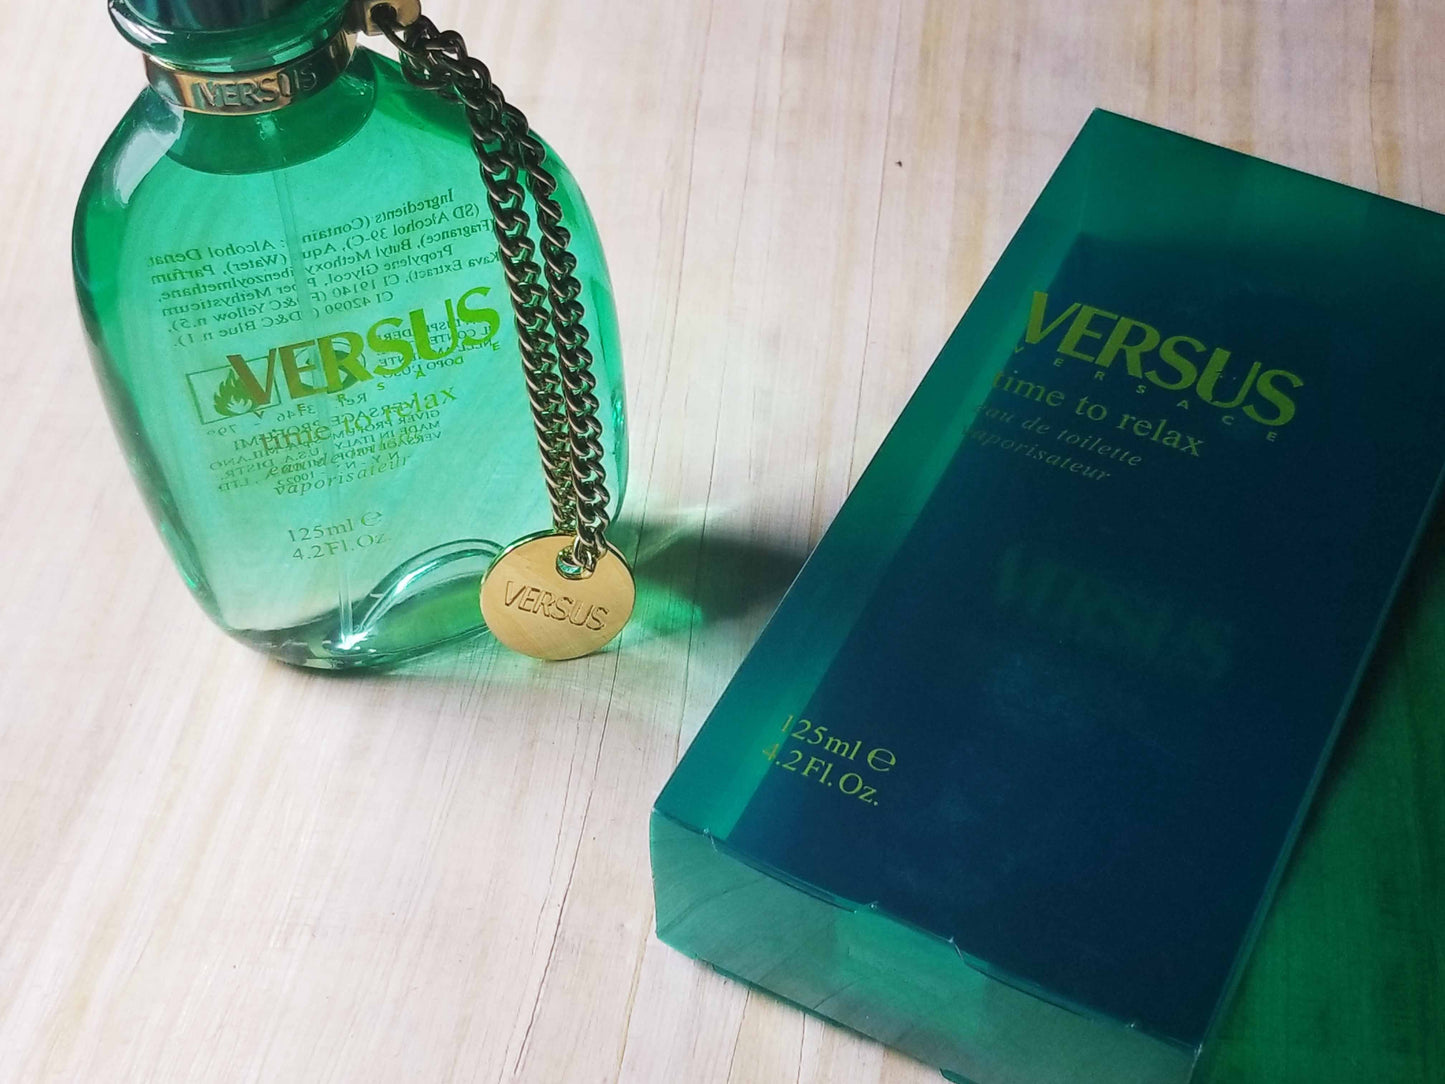 Versus Time For Relax Versace Unisex EDT Spray 125 ml 4.2 oz, Vintage, Rare